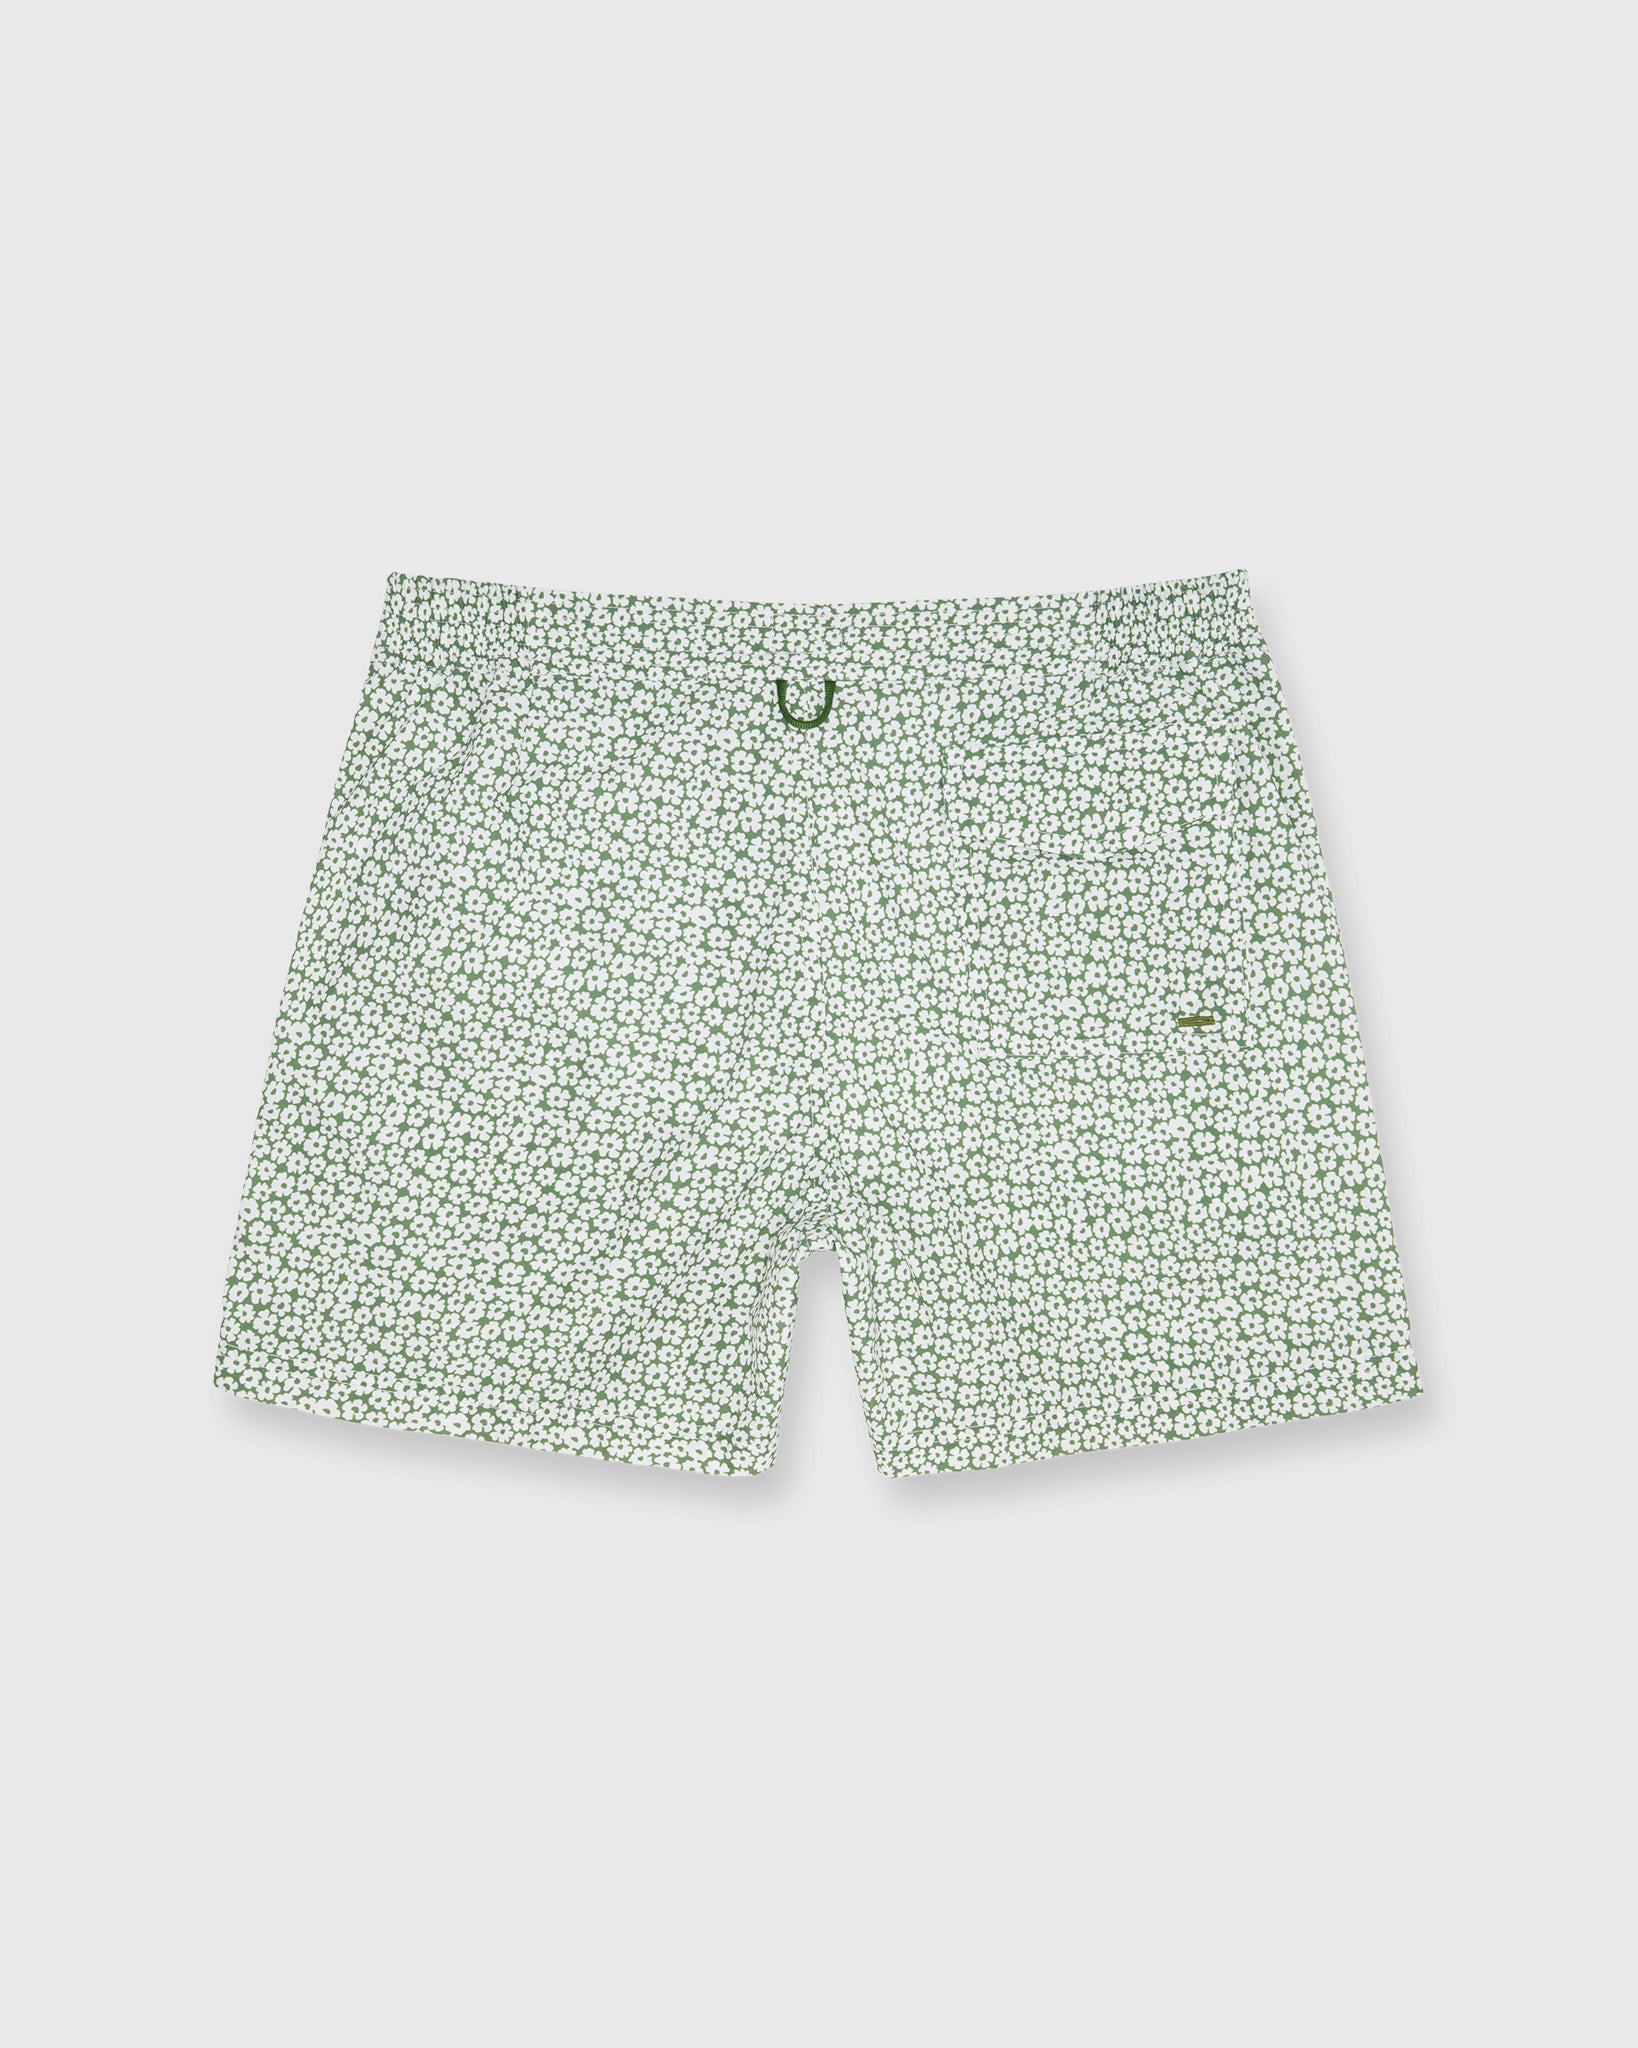 Zip-Front Standard Swim Short in Green Floral Print Nylon